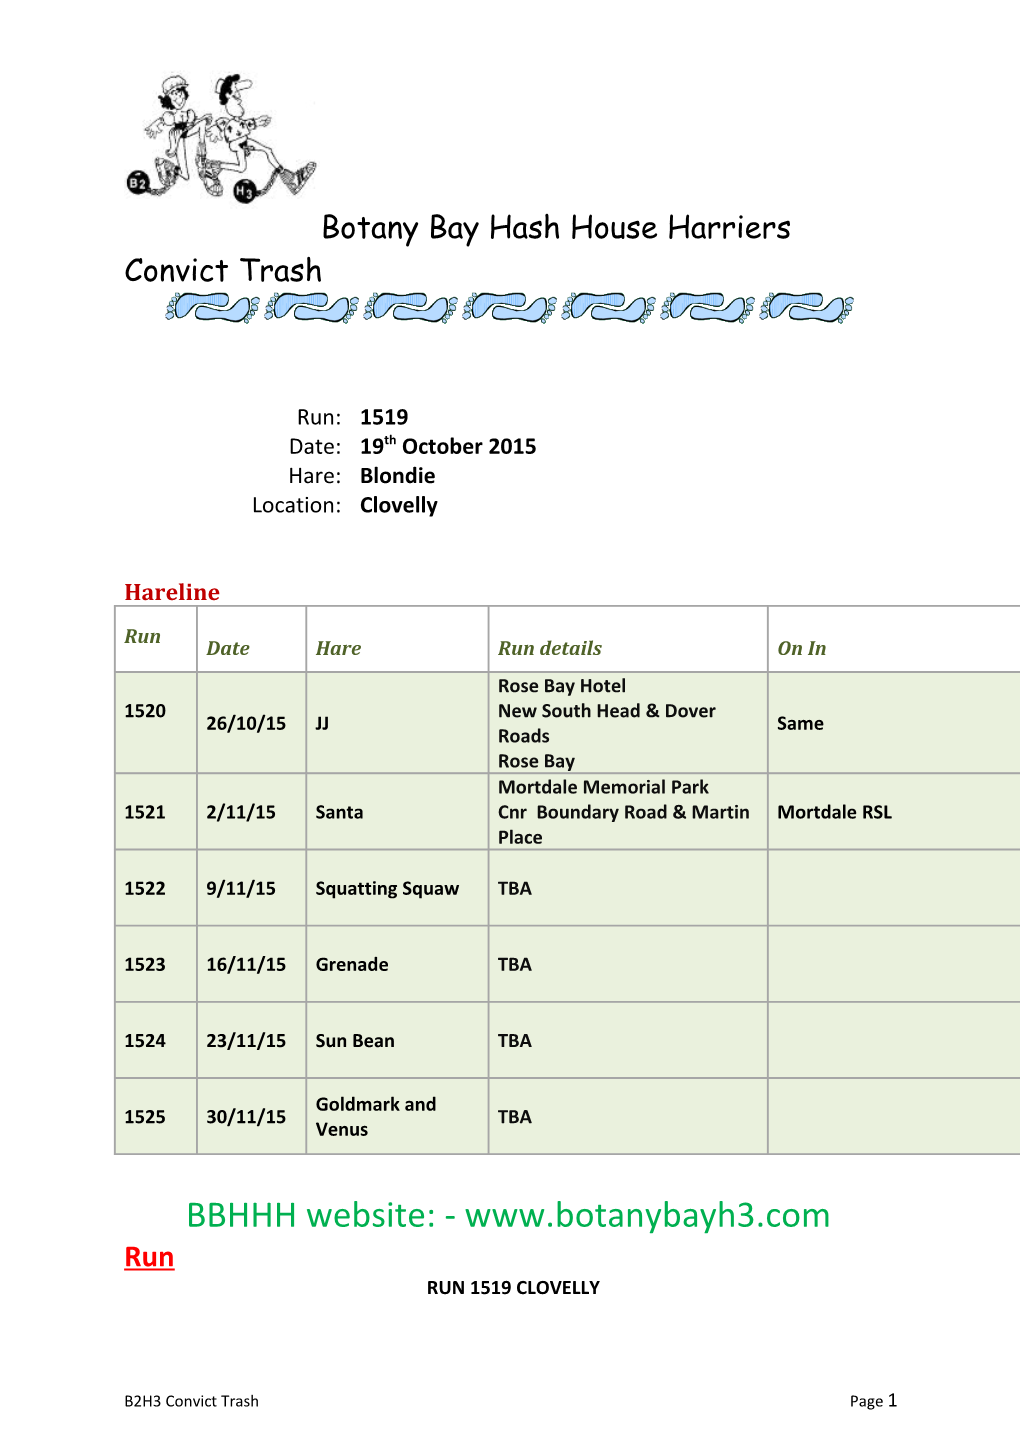 BBHHH Website: